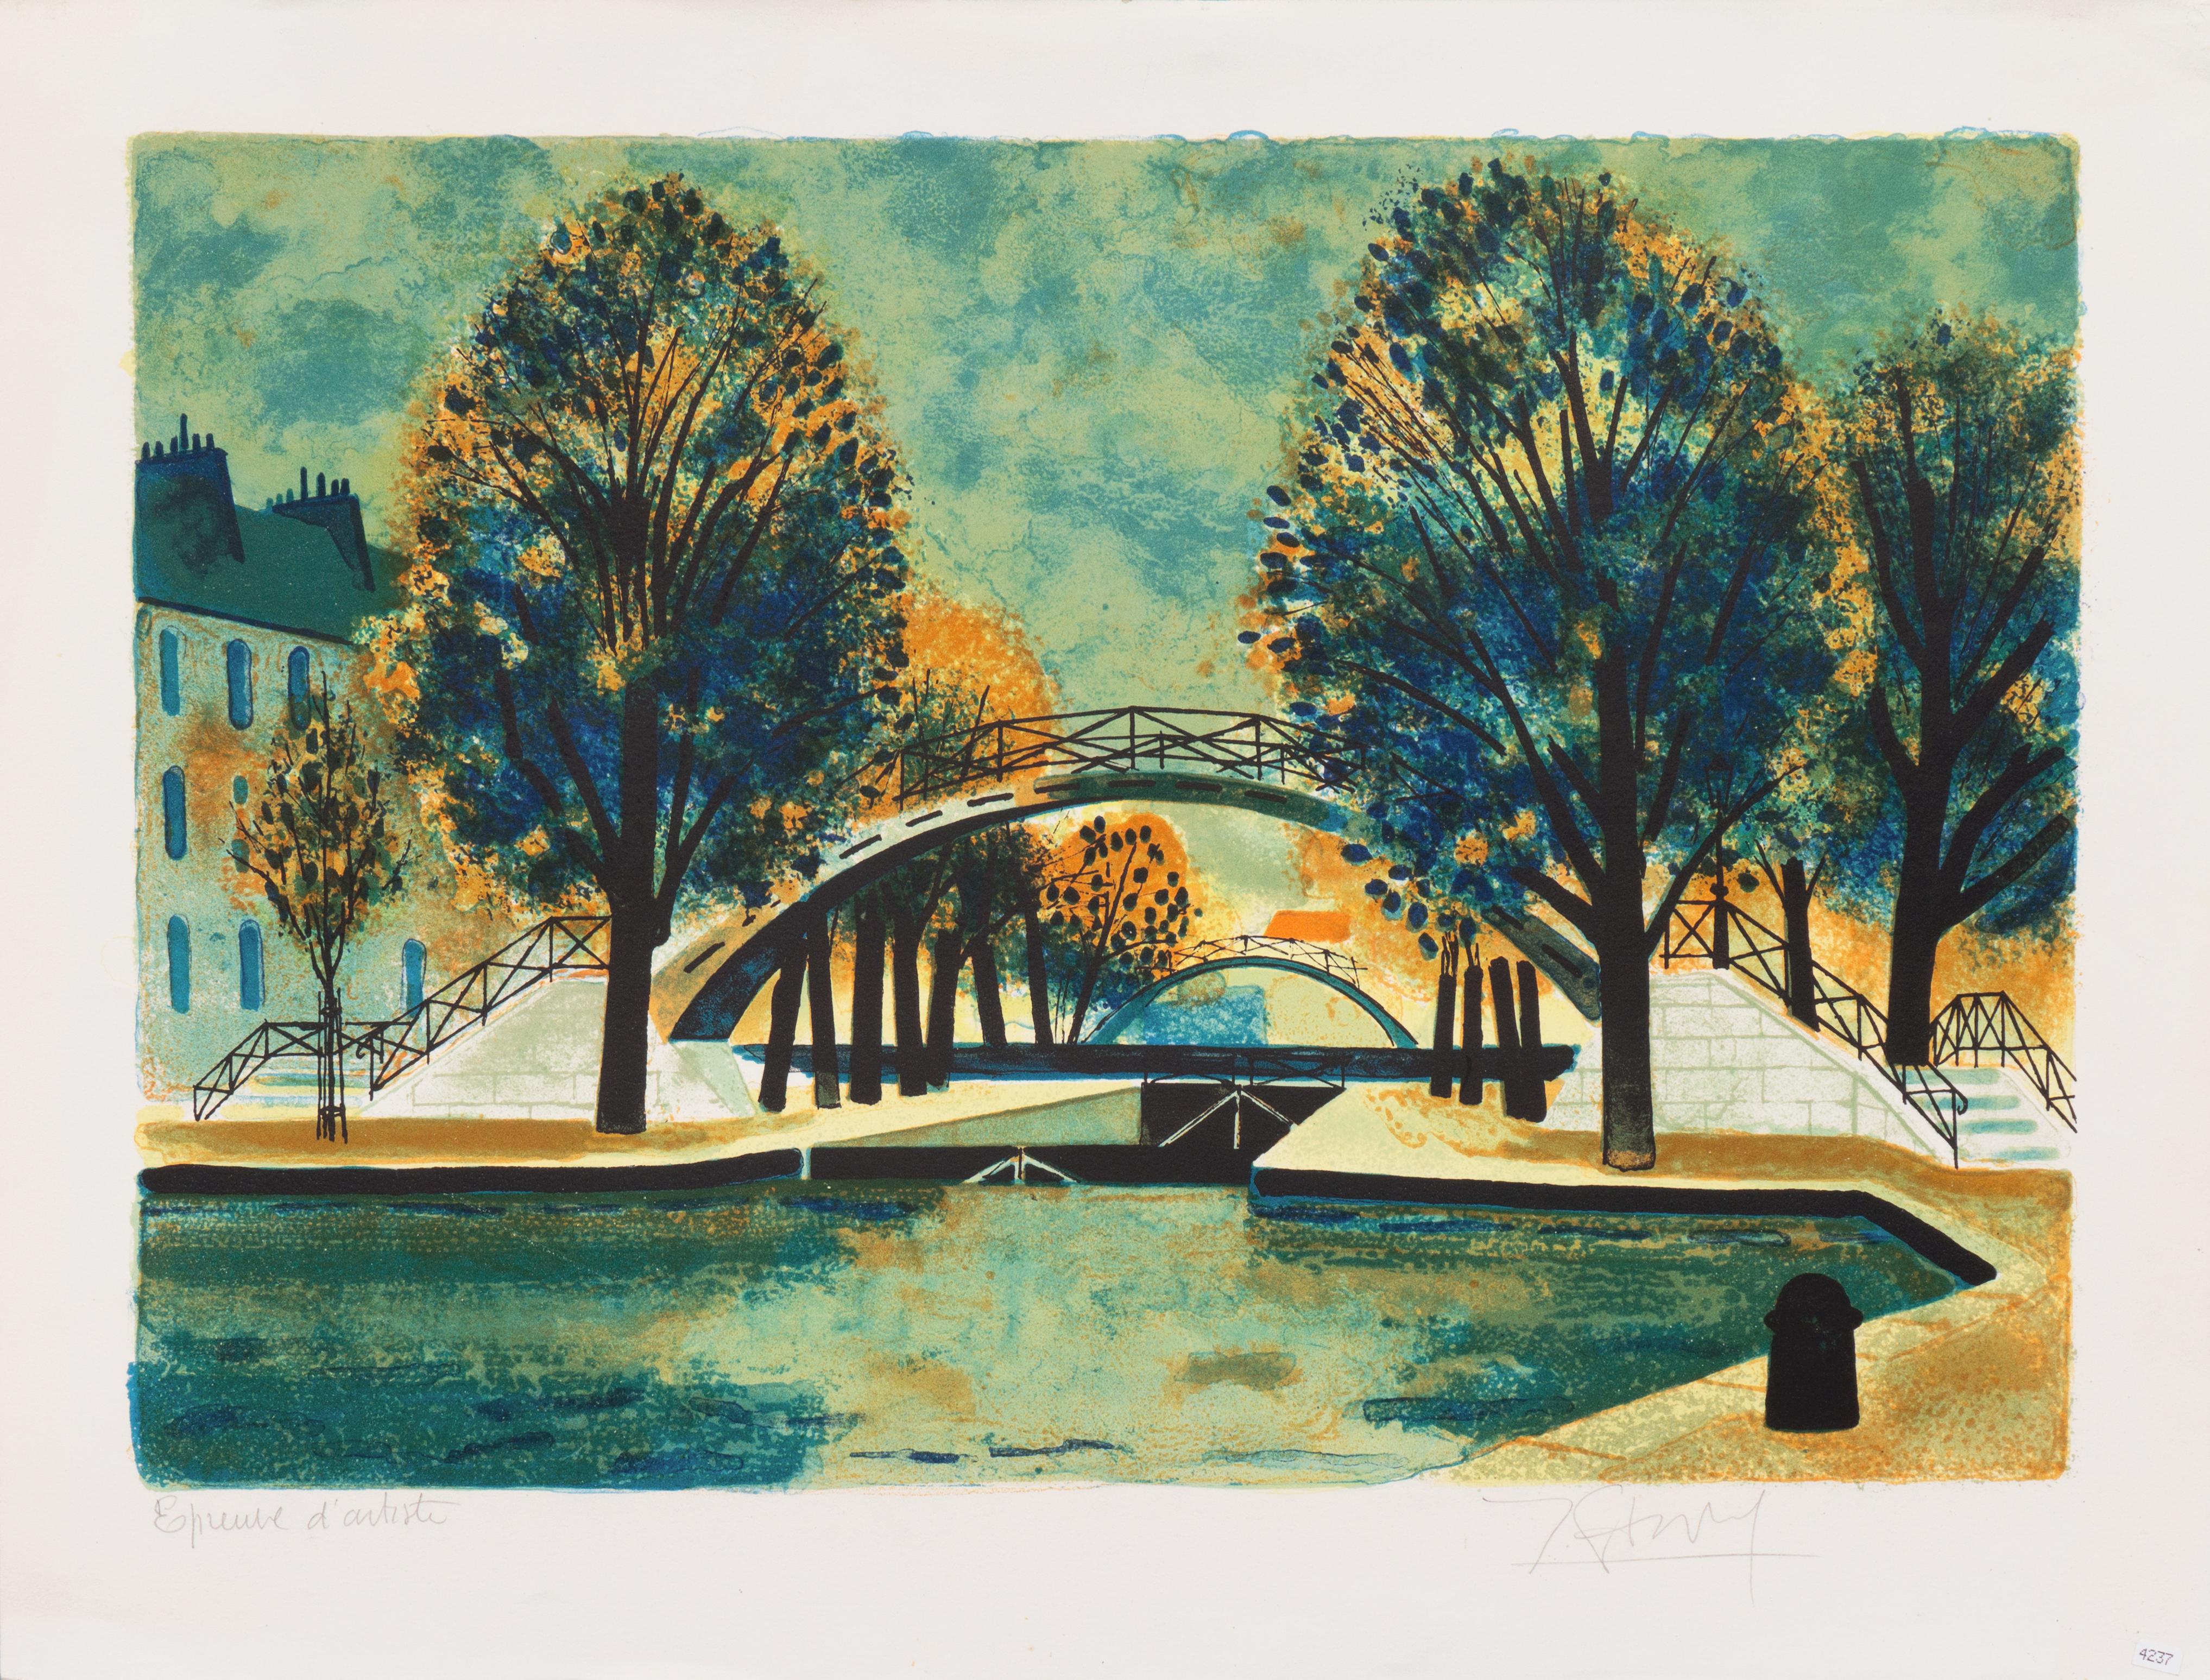 'Canal Saint-Martin', School of Paris, Paris MoMA, Post-Impressionist landscape - Print by Yves Ganne